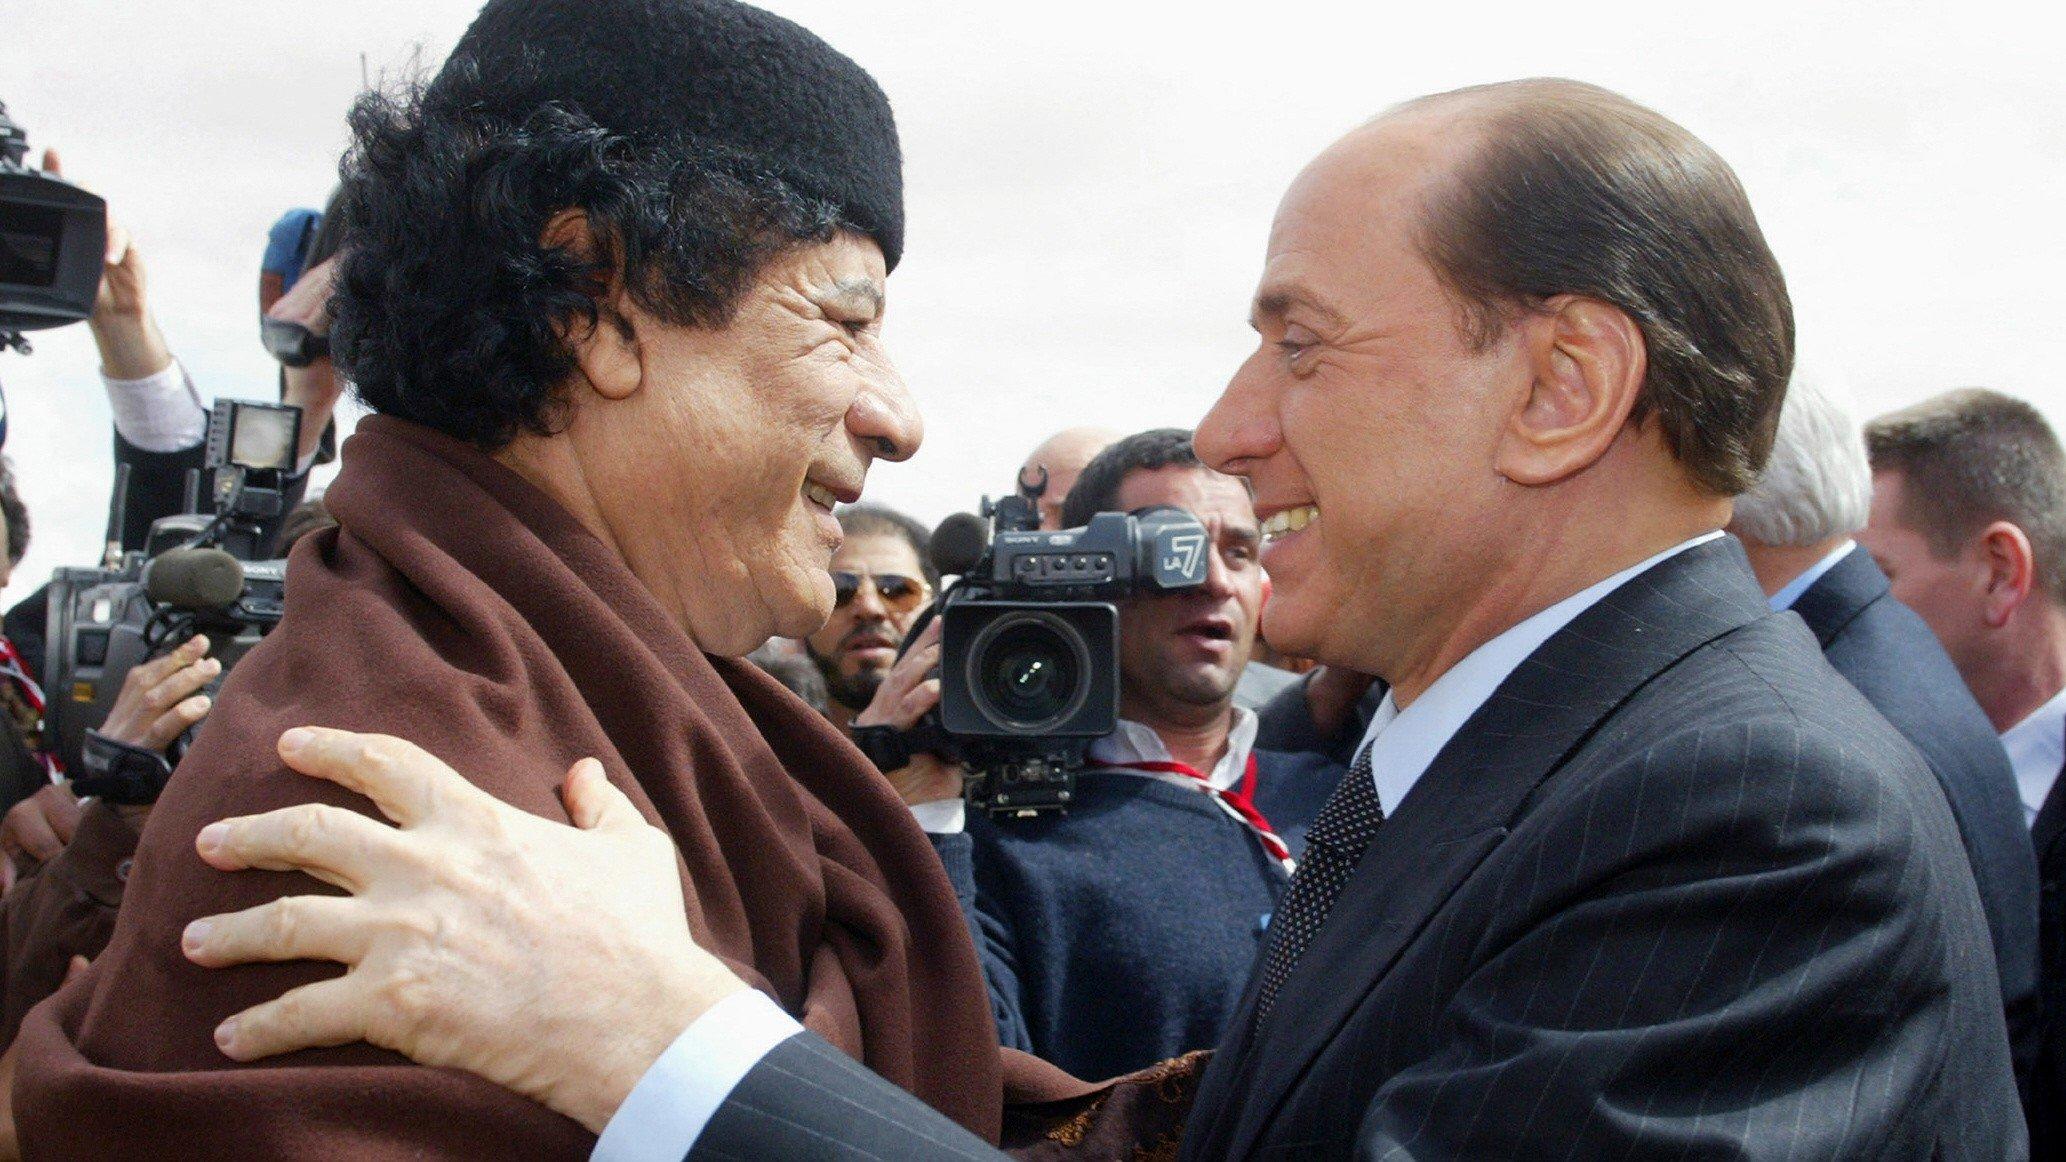 Libyan leader Muammar Gaddafi greets Italian Prime Minister Silvio Berlusconi during a meeting in Sirte, Libya on 10 February 2004 (AFP)